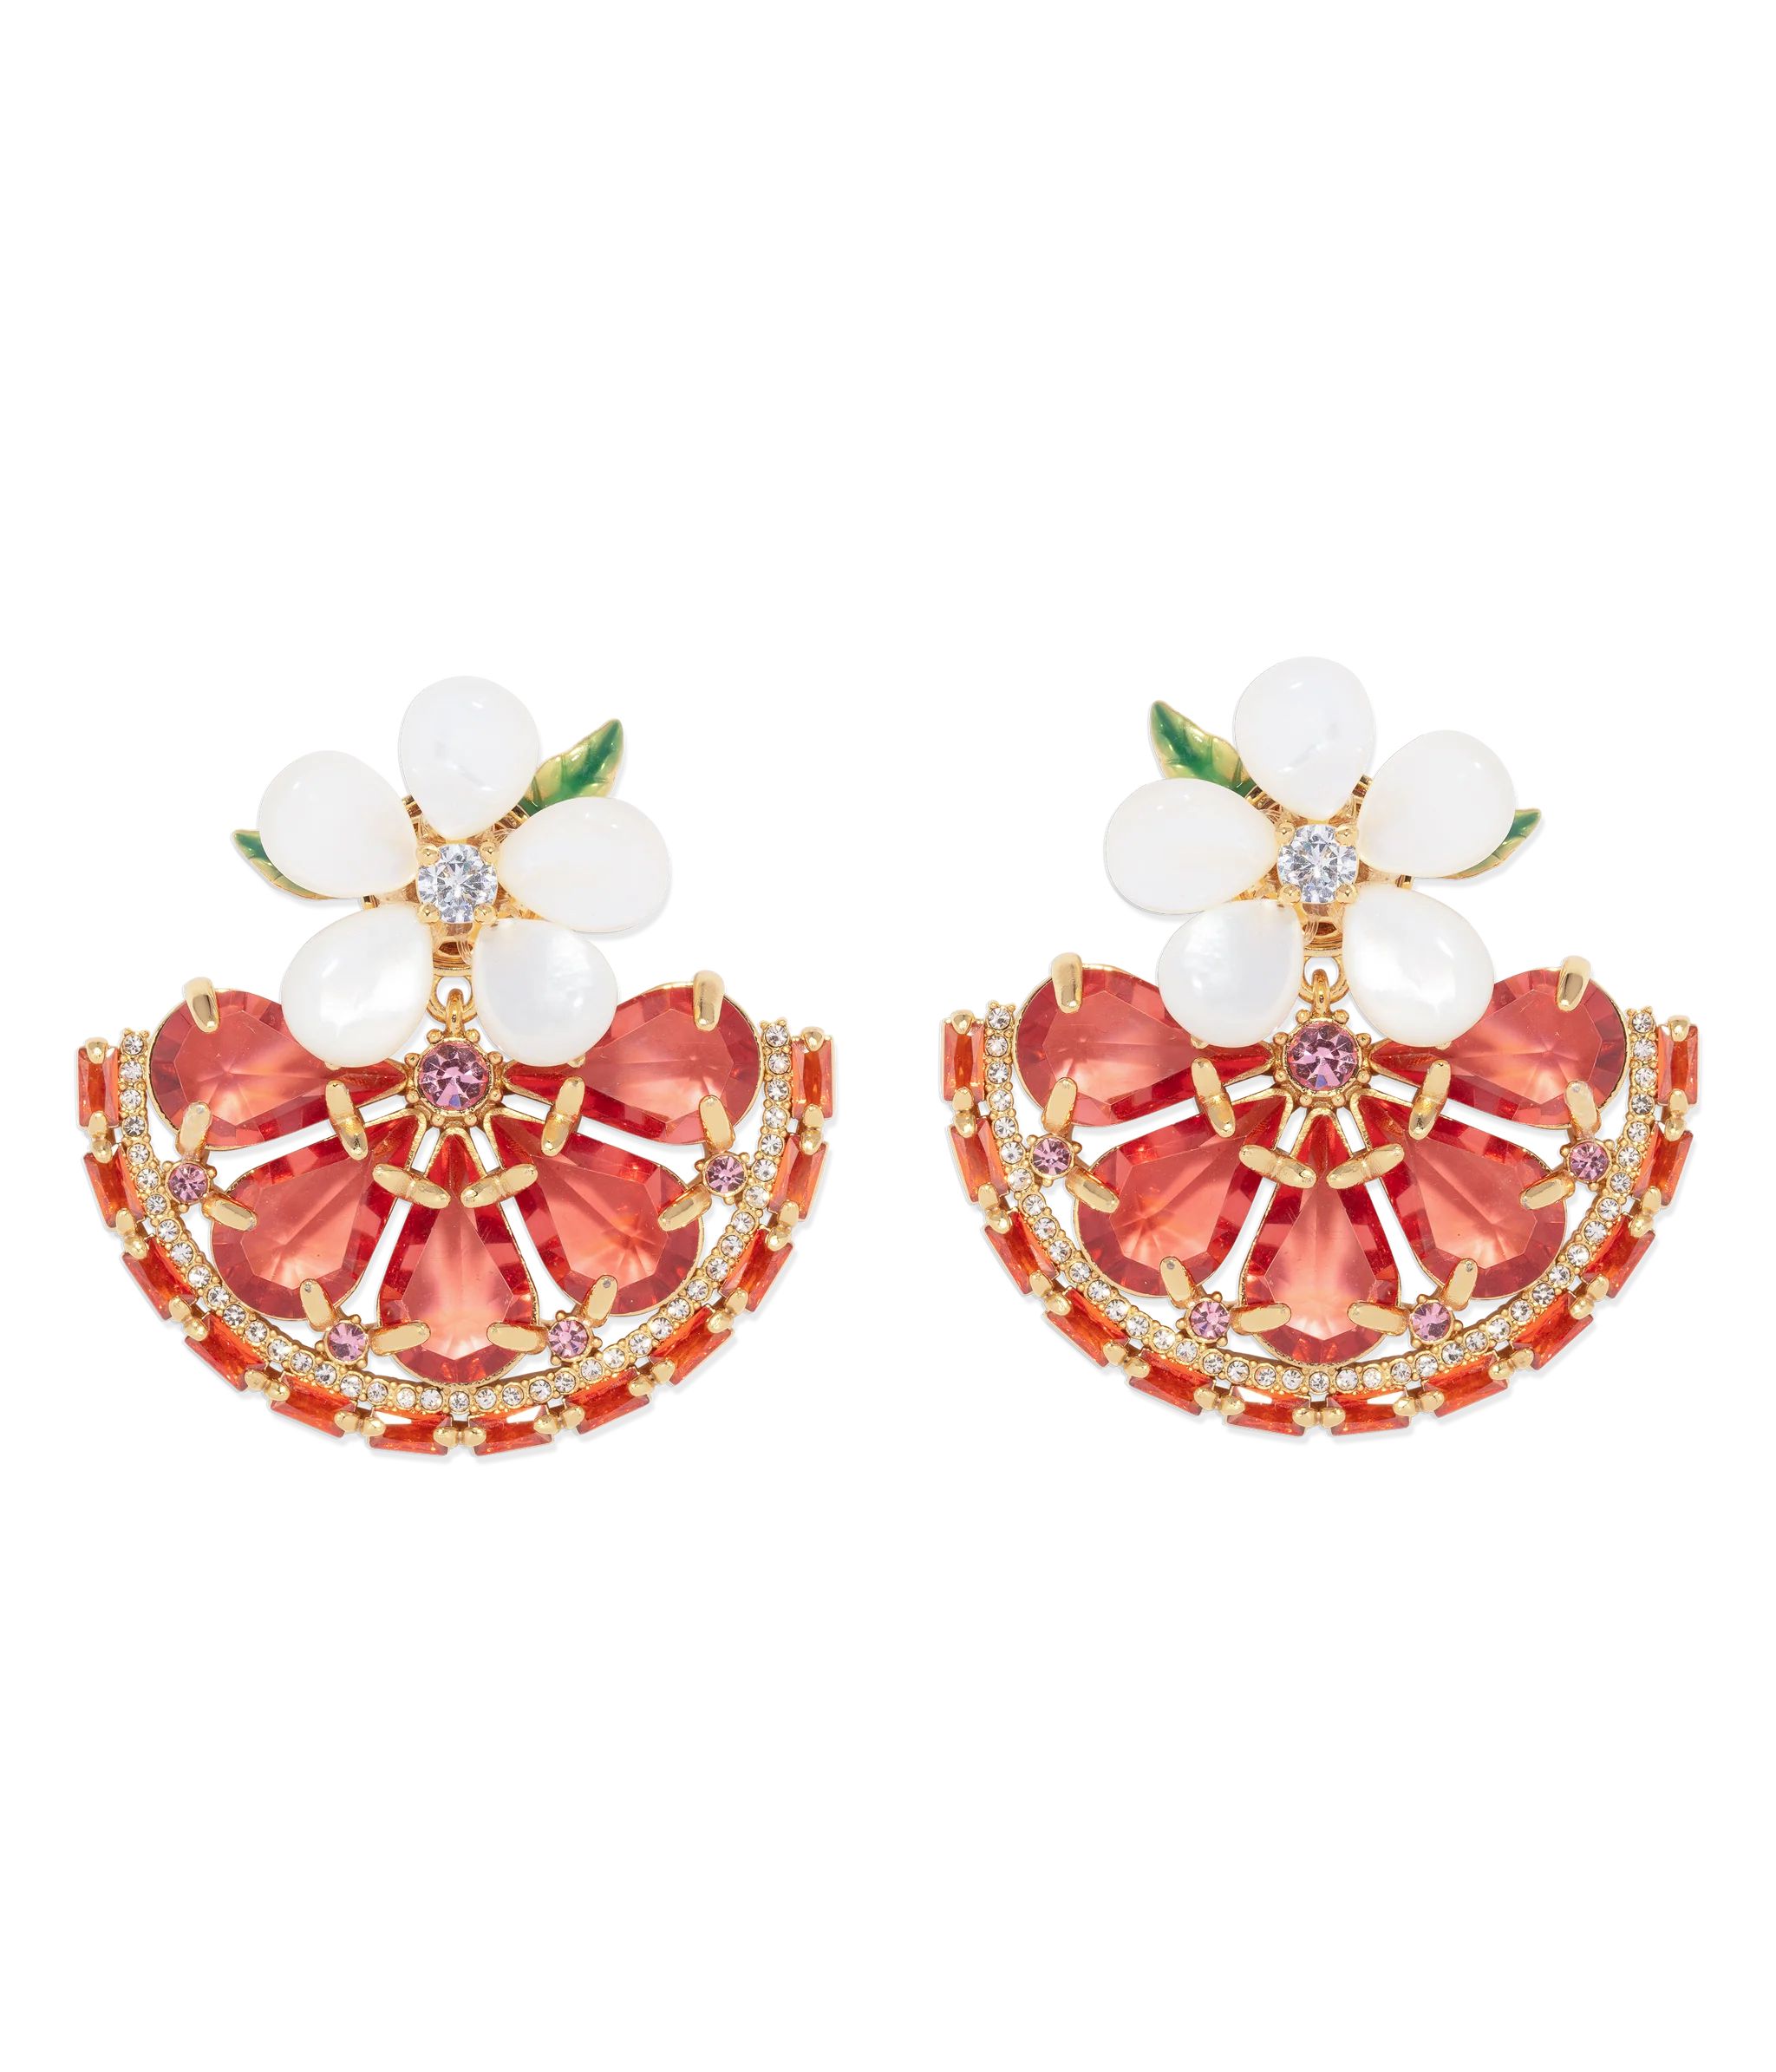 "Spritz Please" Orange Slice Earrings | Loren Hope Designs